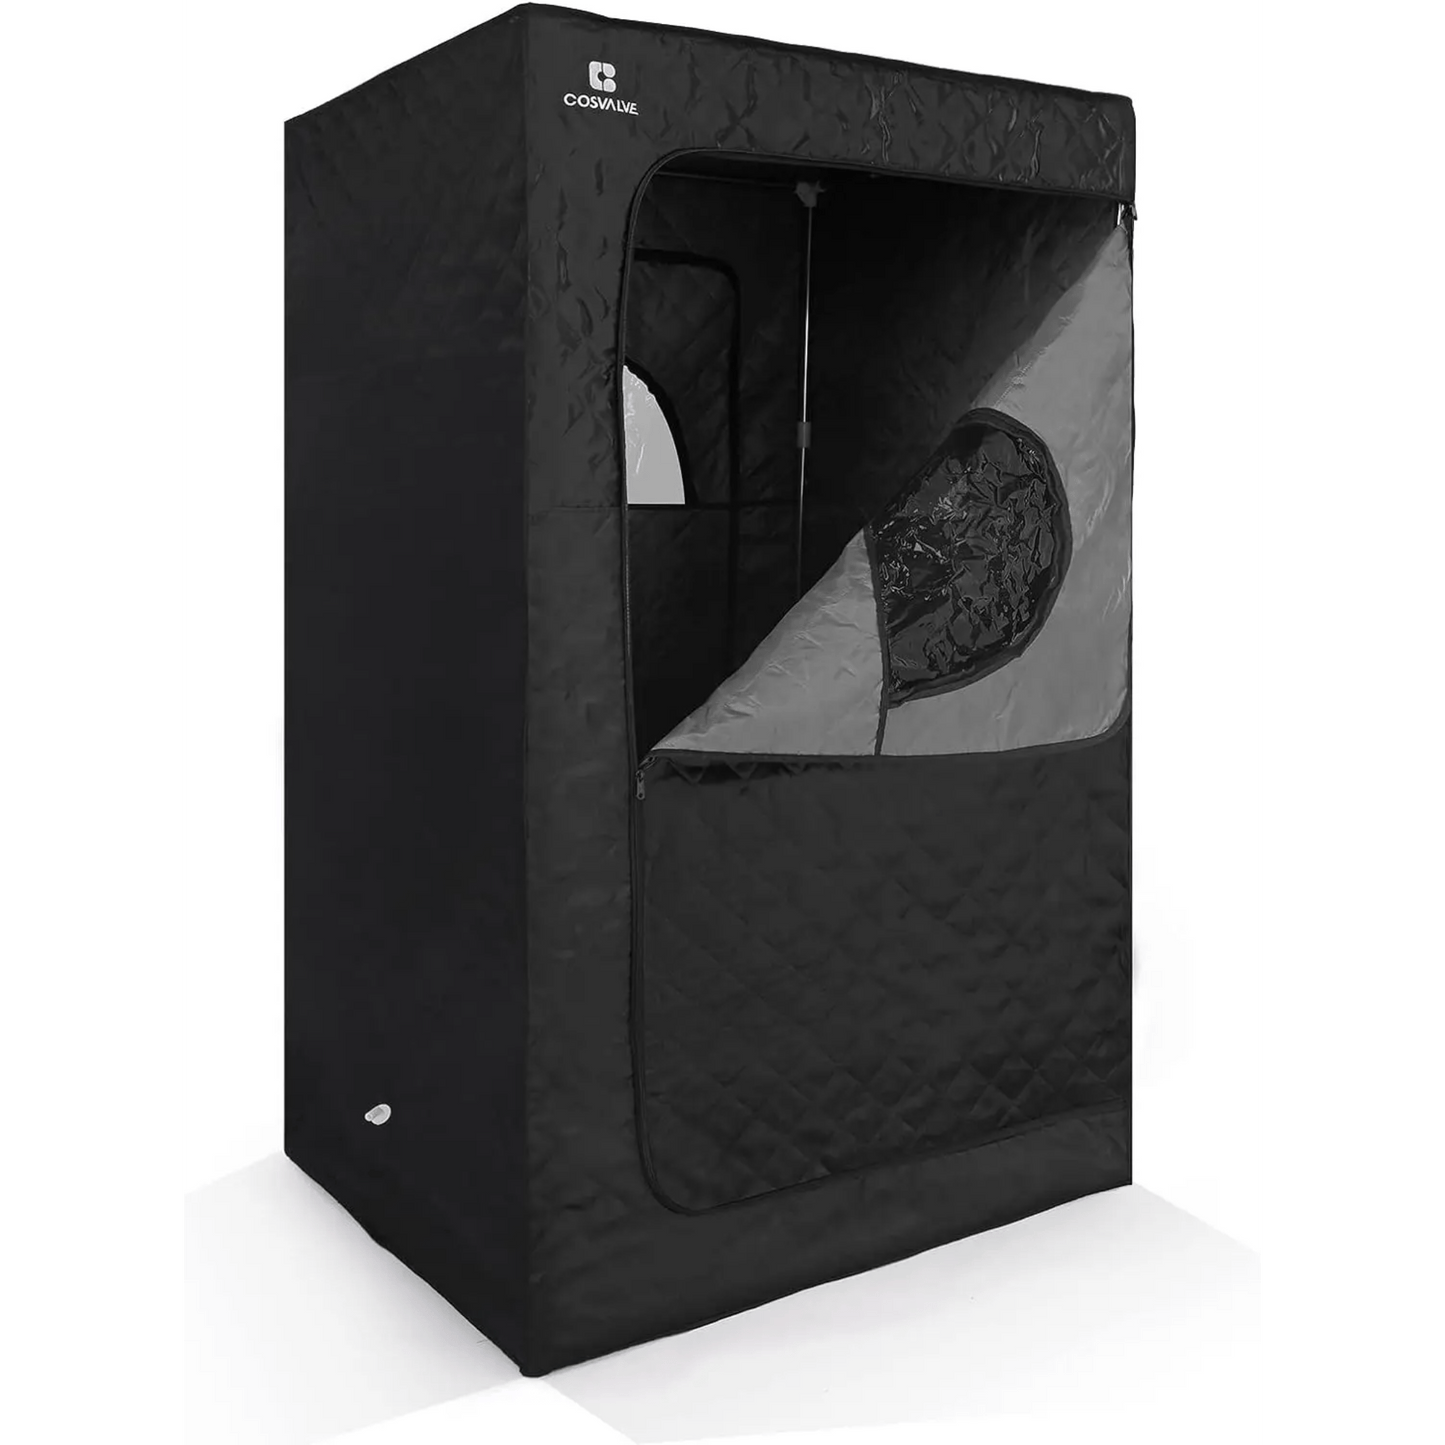 Personal Portable Indoor / Outdoor Home Steam Sauna Kit - Merchandise Plug